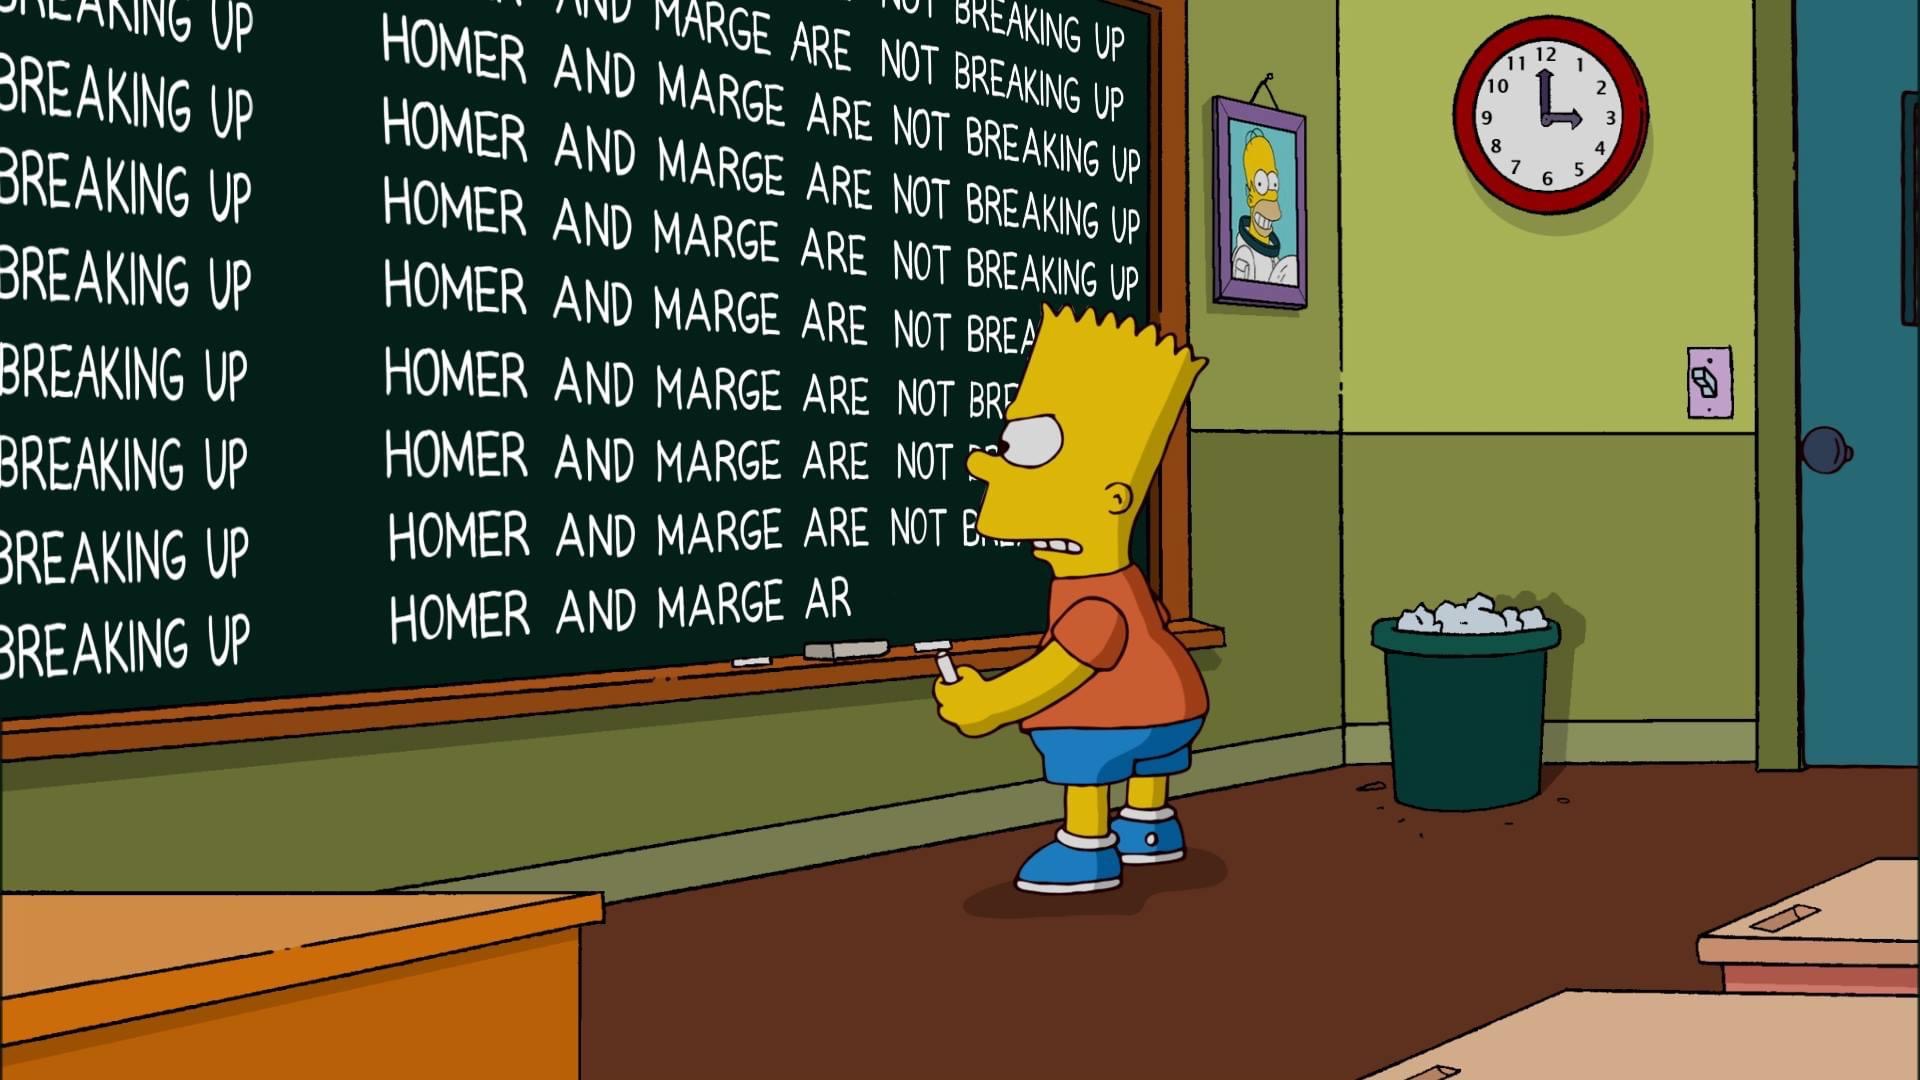 bart simpson chalkboard - Up Breaking Up Breaking Up Breaking Up Arge Are Not Breaking Up Homer And Marge Are Not Breaking Up Homer And Marge Are Not Breaking Up 12 11 10 L 2 9 3 8 4 7. 5 6 Breaking Up Breaking Up Breaking Up Homer And Marge Are Not Break